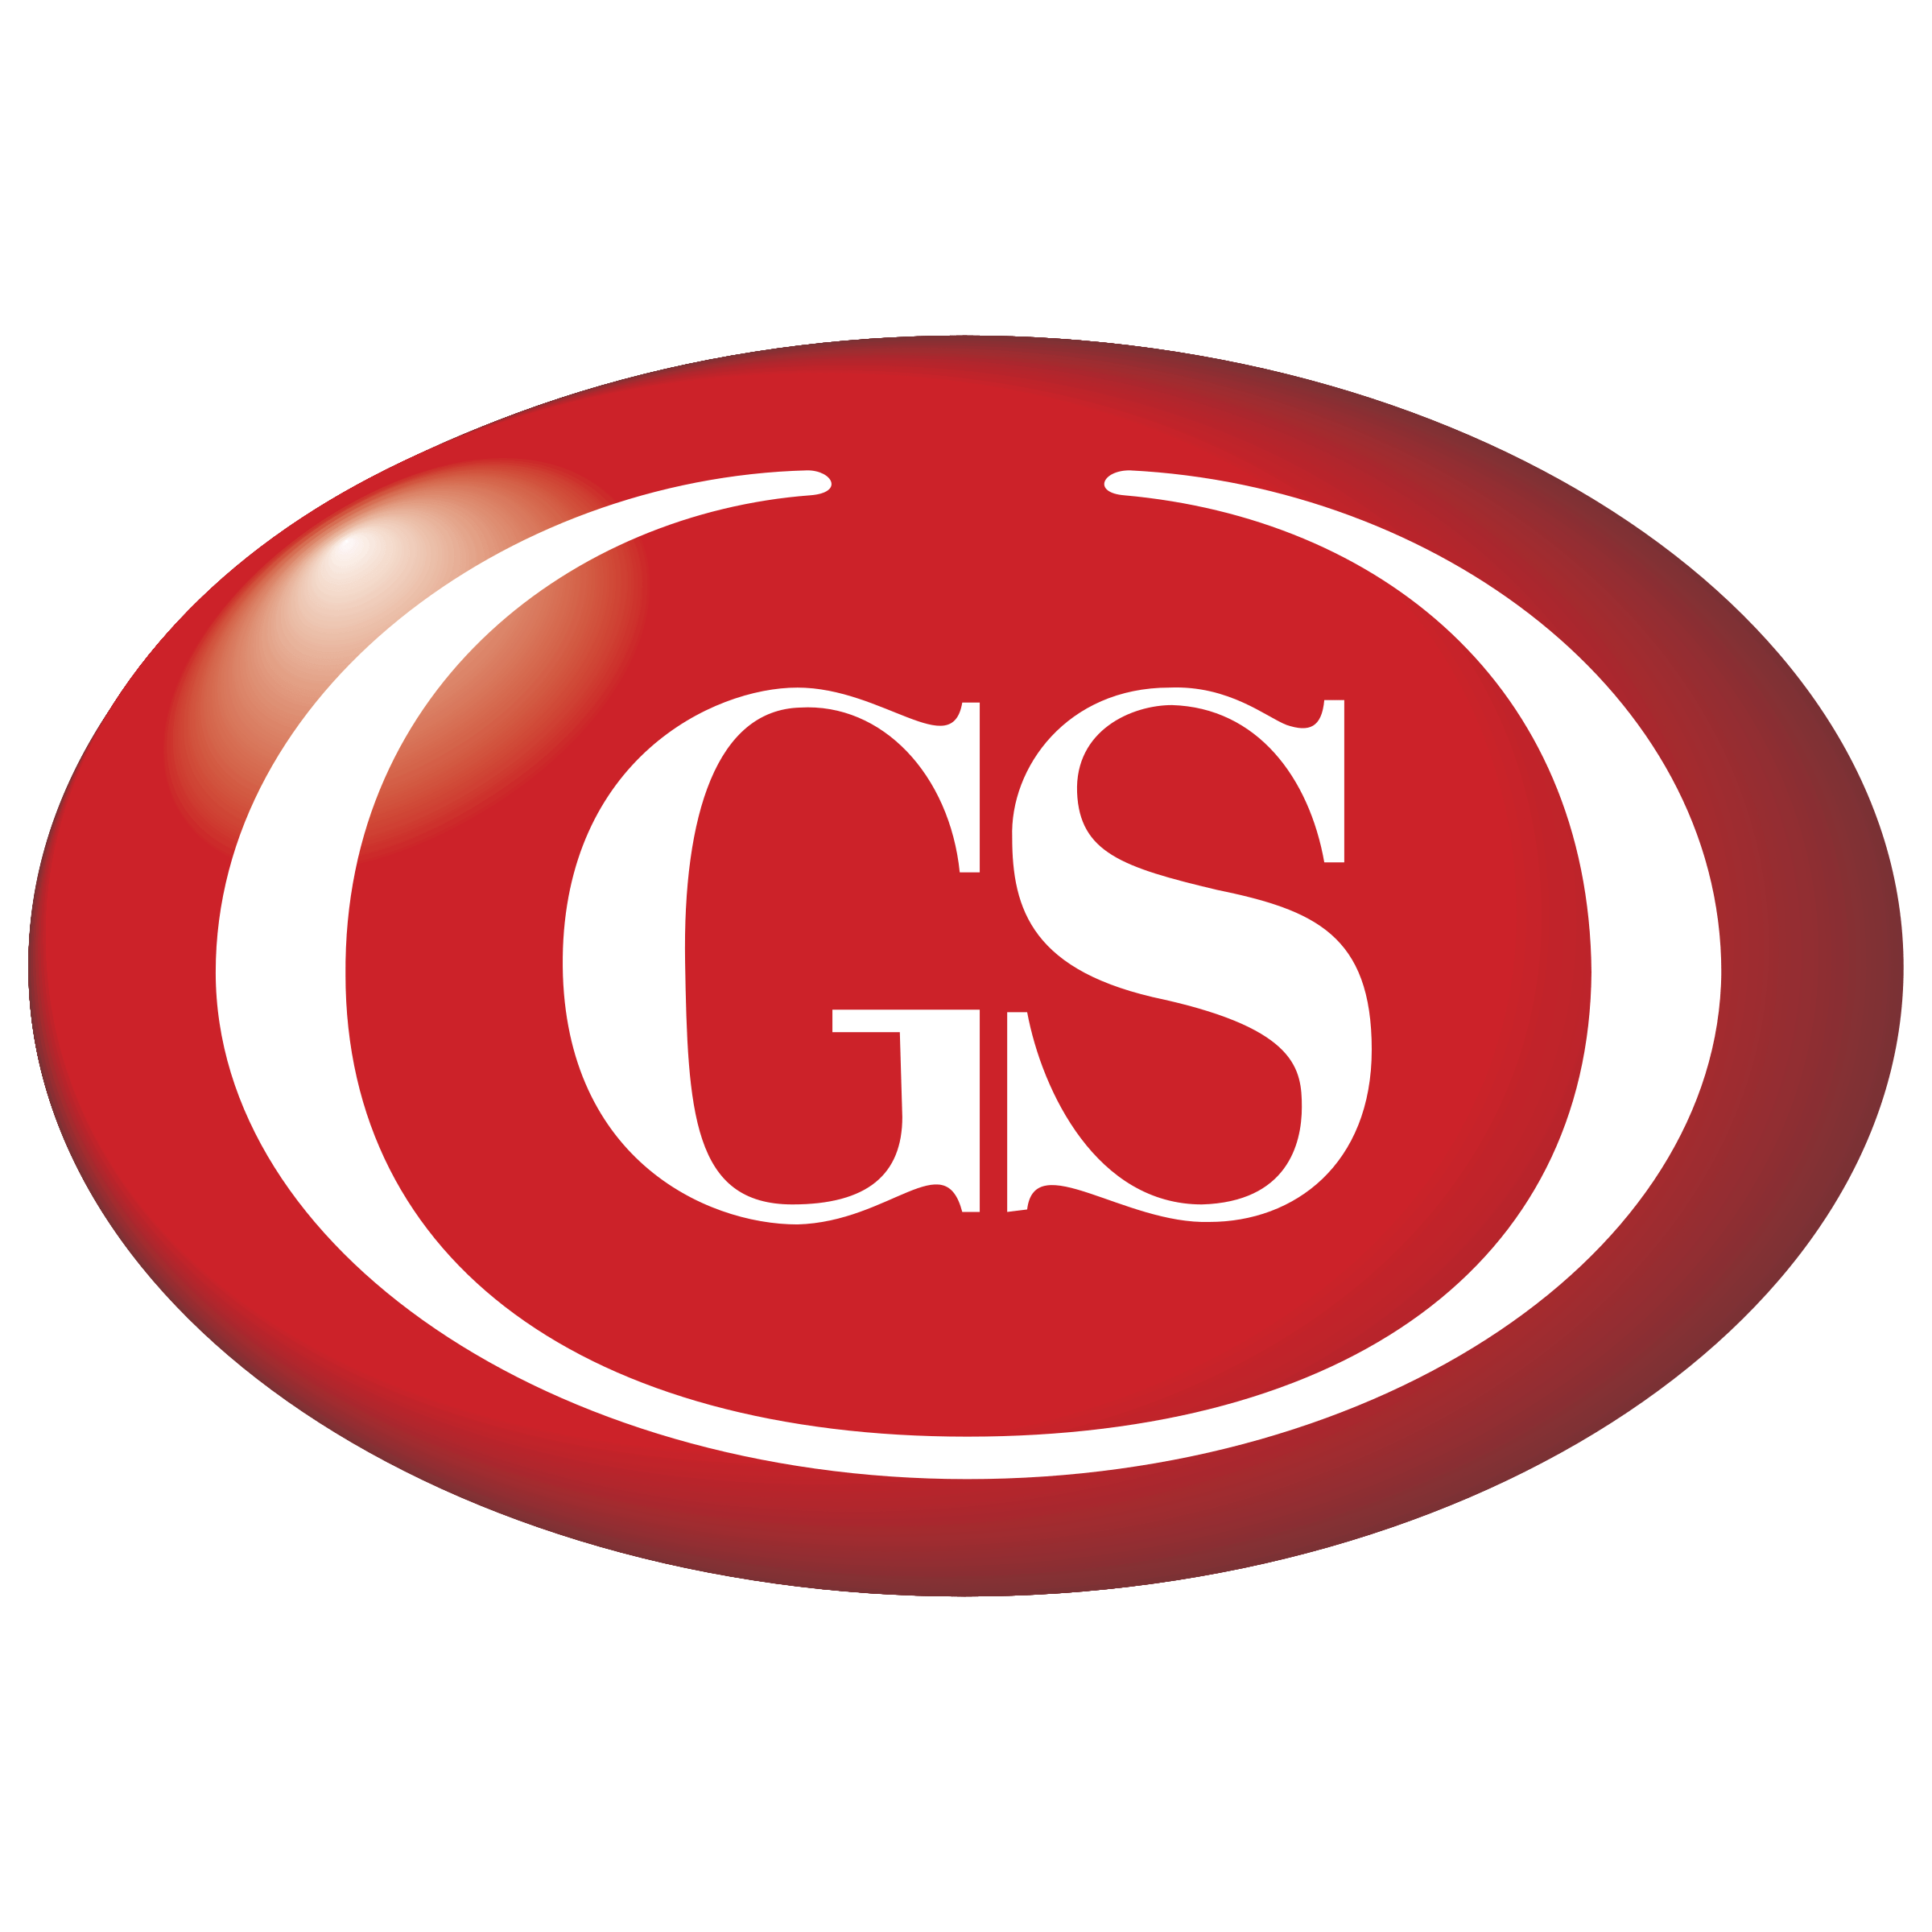 GS Logo - GS Logo PNG Transparent & SVG Vector - Freebie Supply